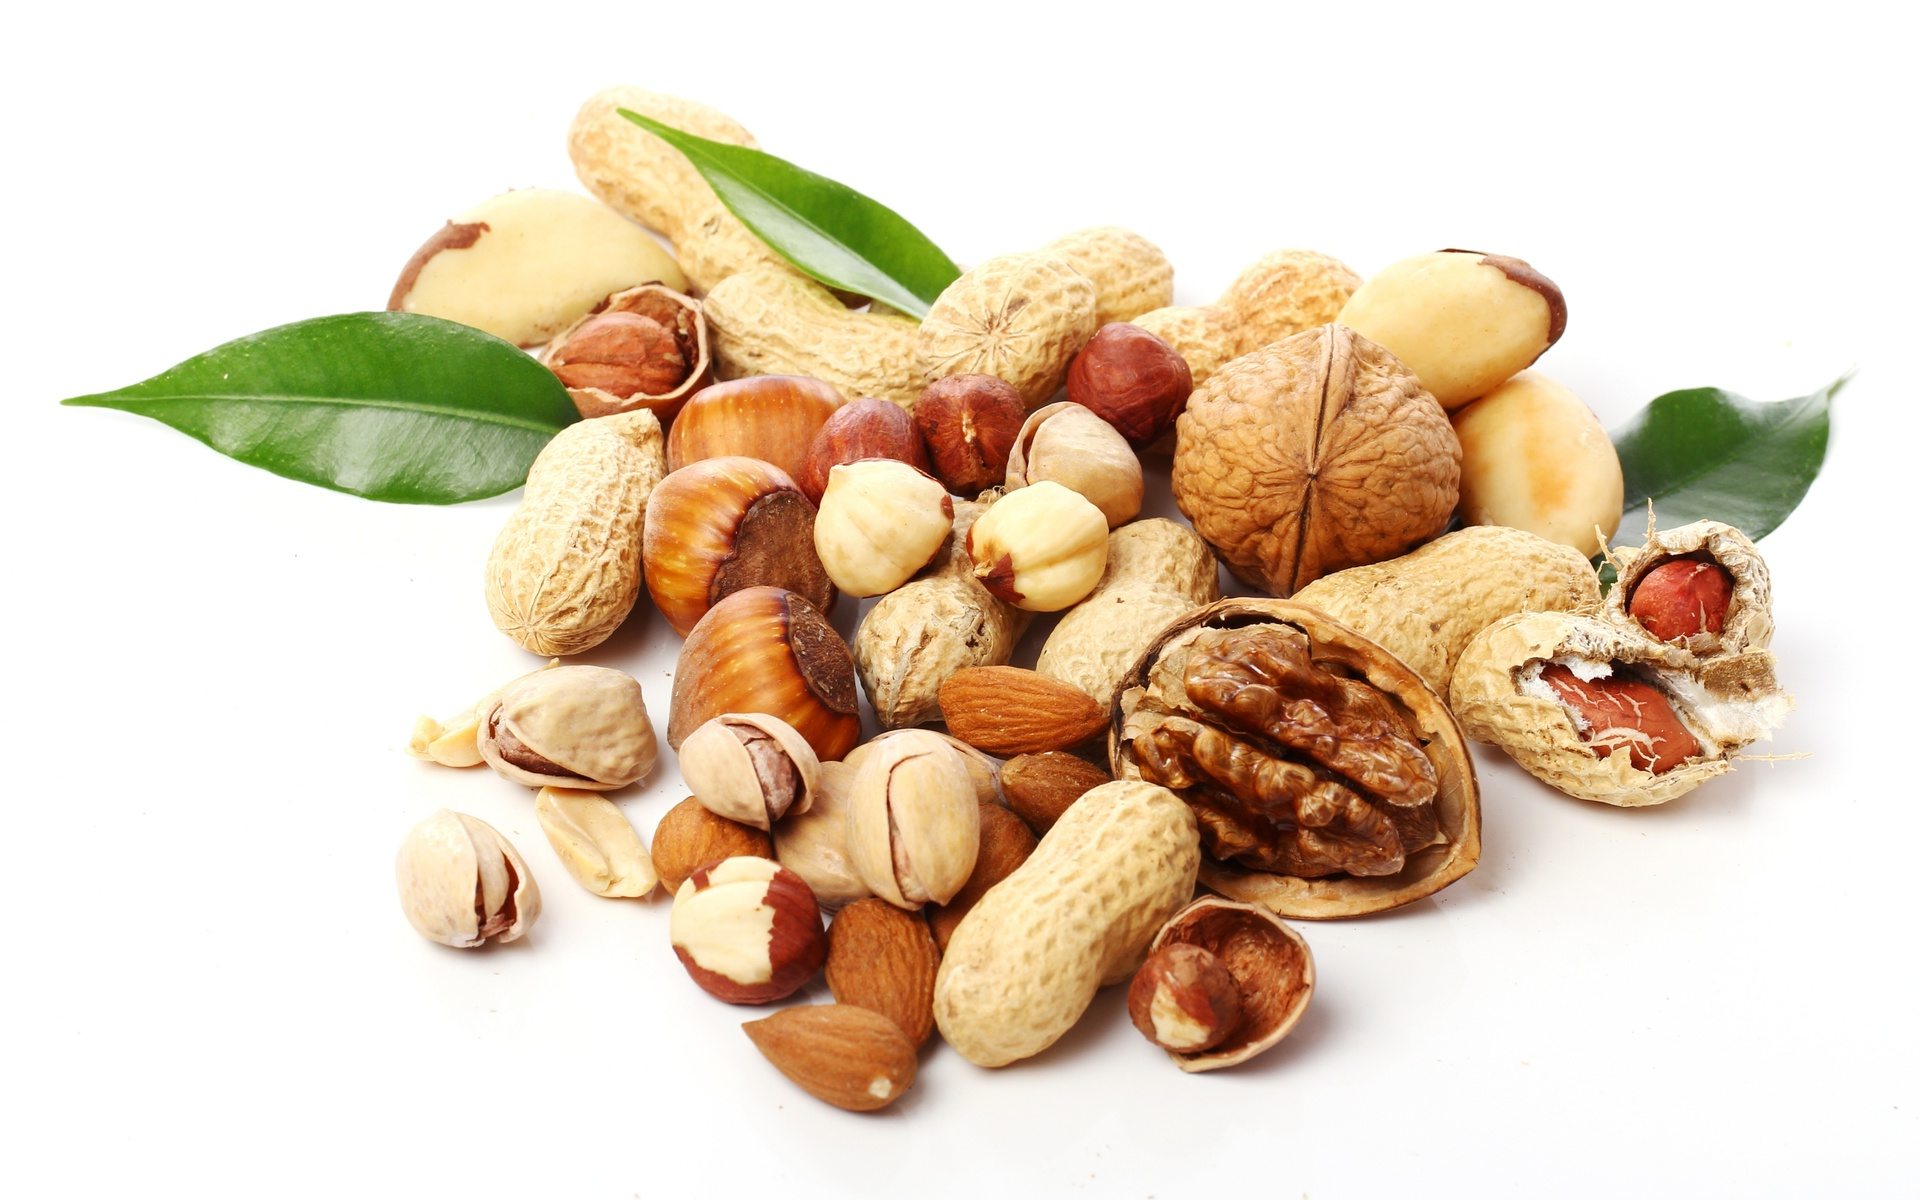 Can diabetics eat nuts?